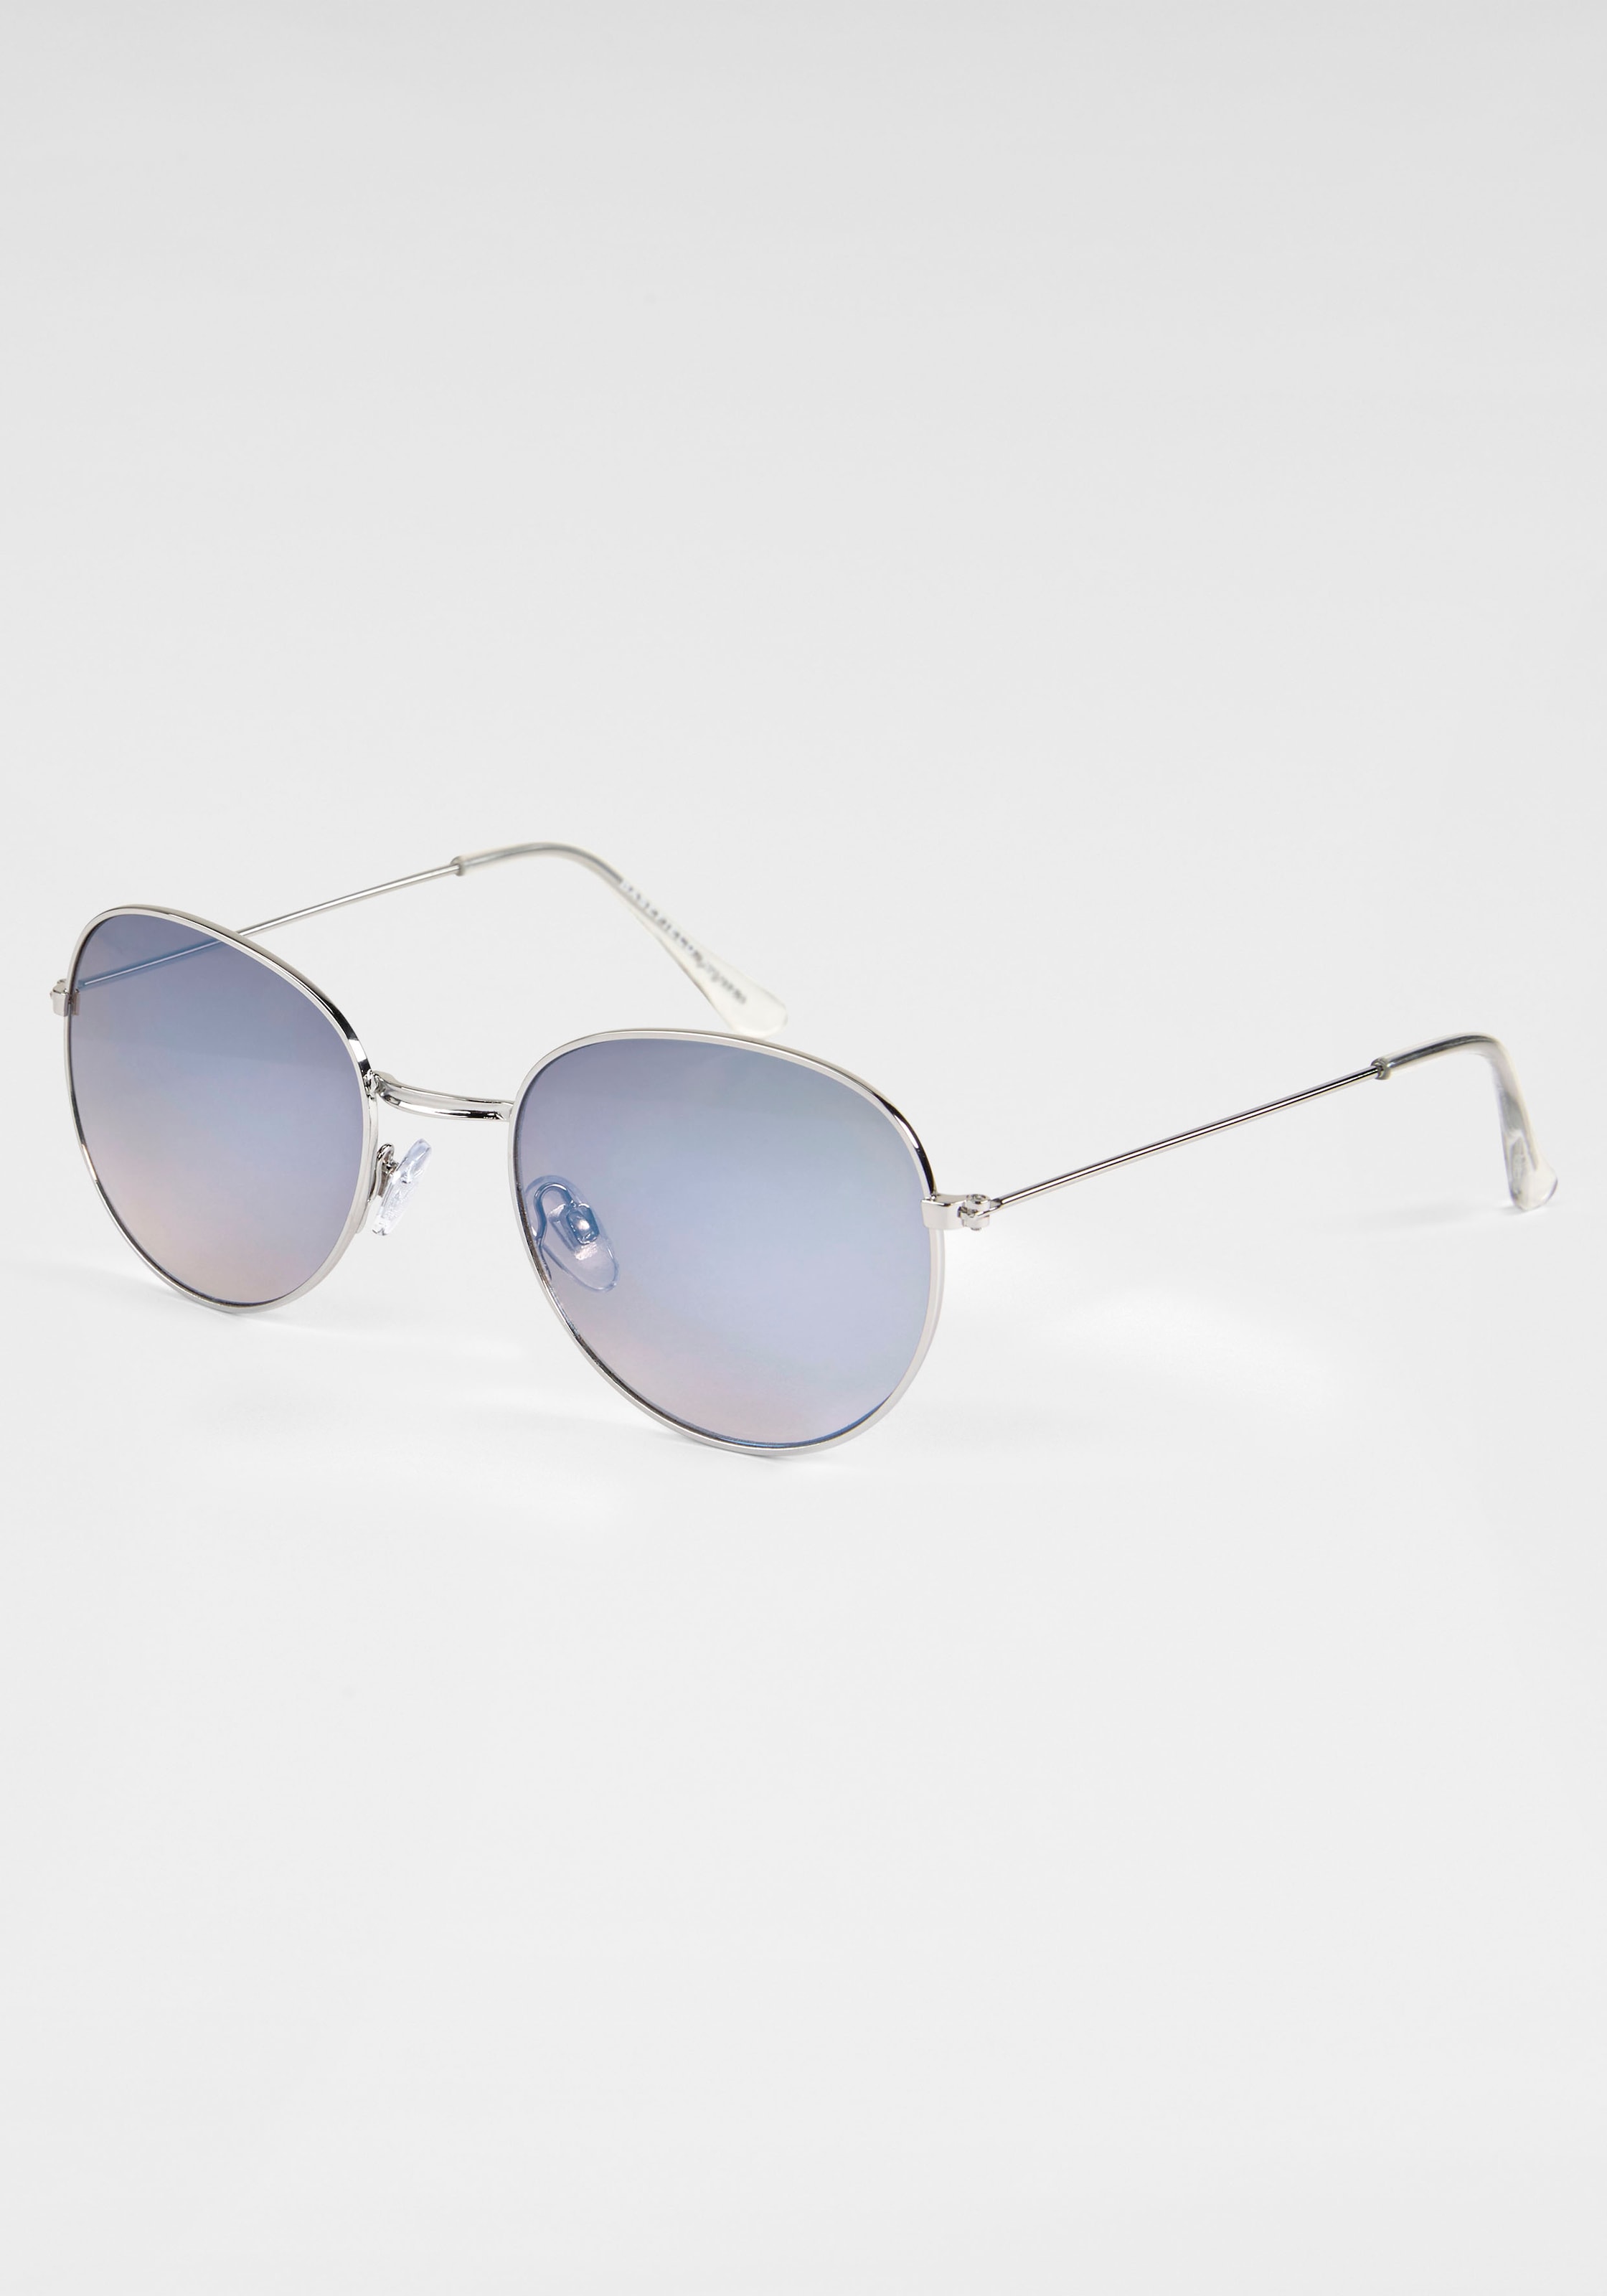 OTTO Accessoires Sonnenbrillen Sonnenbrille » Sonnenbrille 12376 Ibex Sunglasses Farbe« 